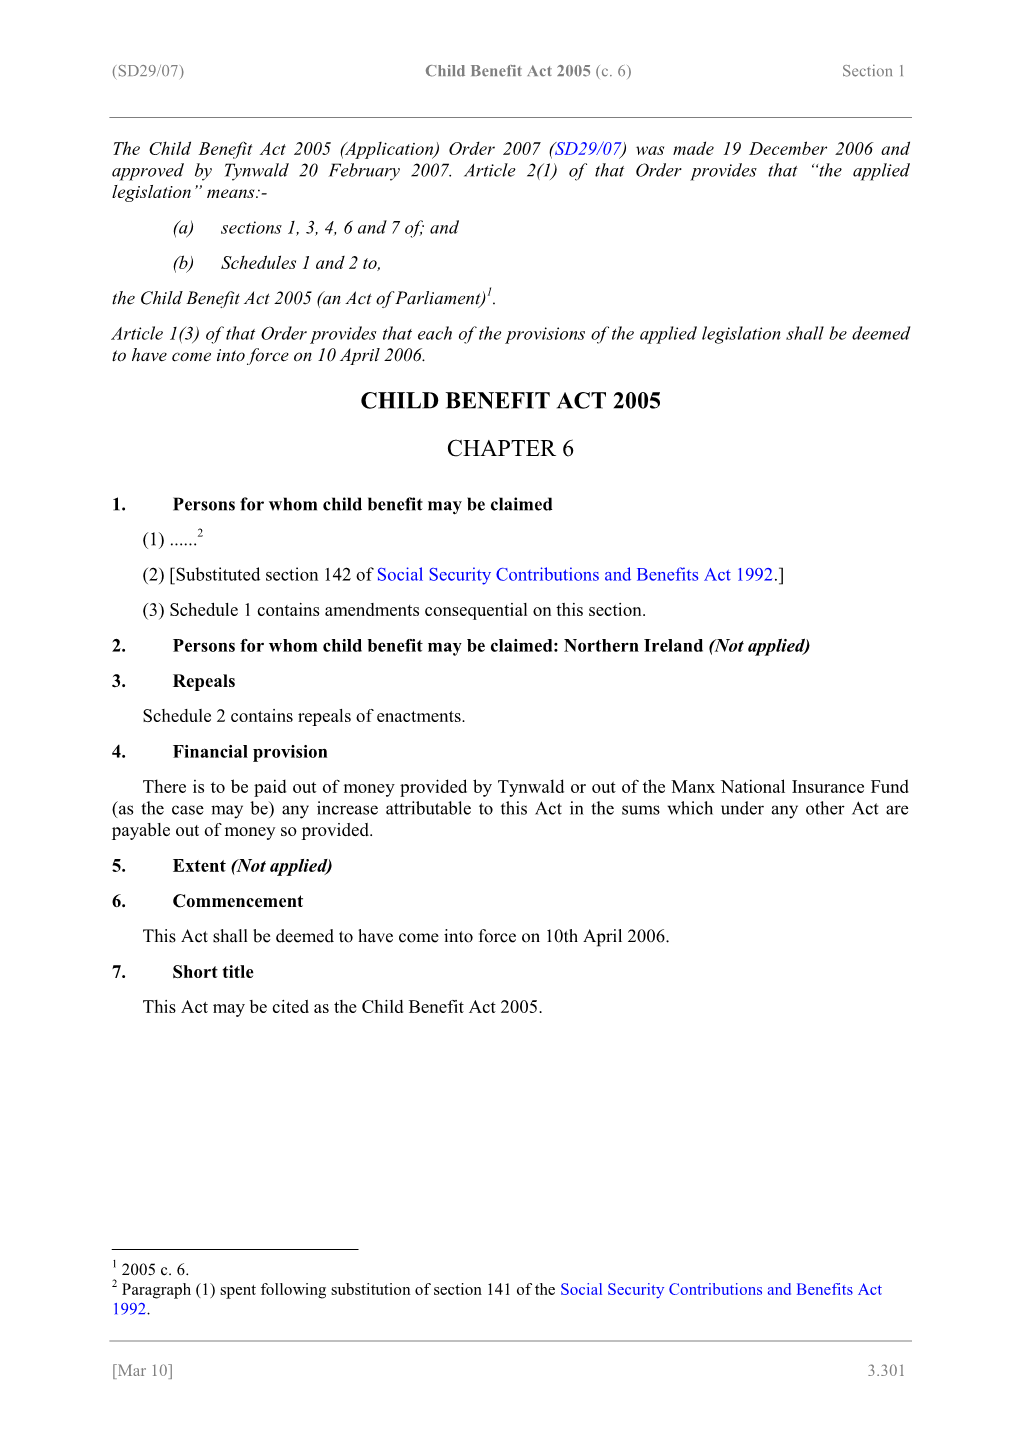 Child Benefit Act 2005 (C